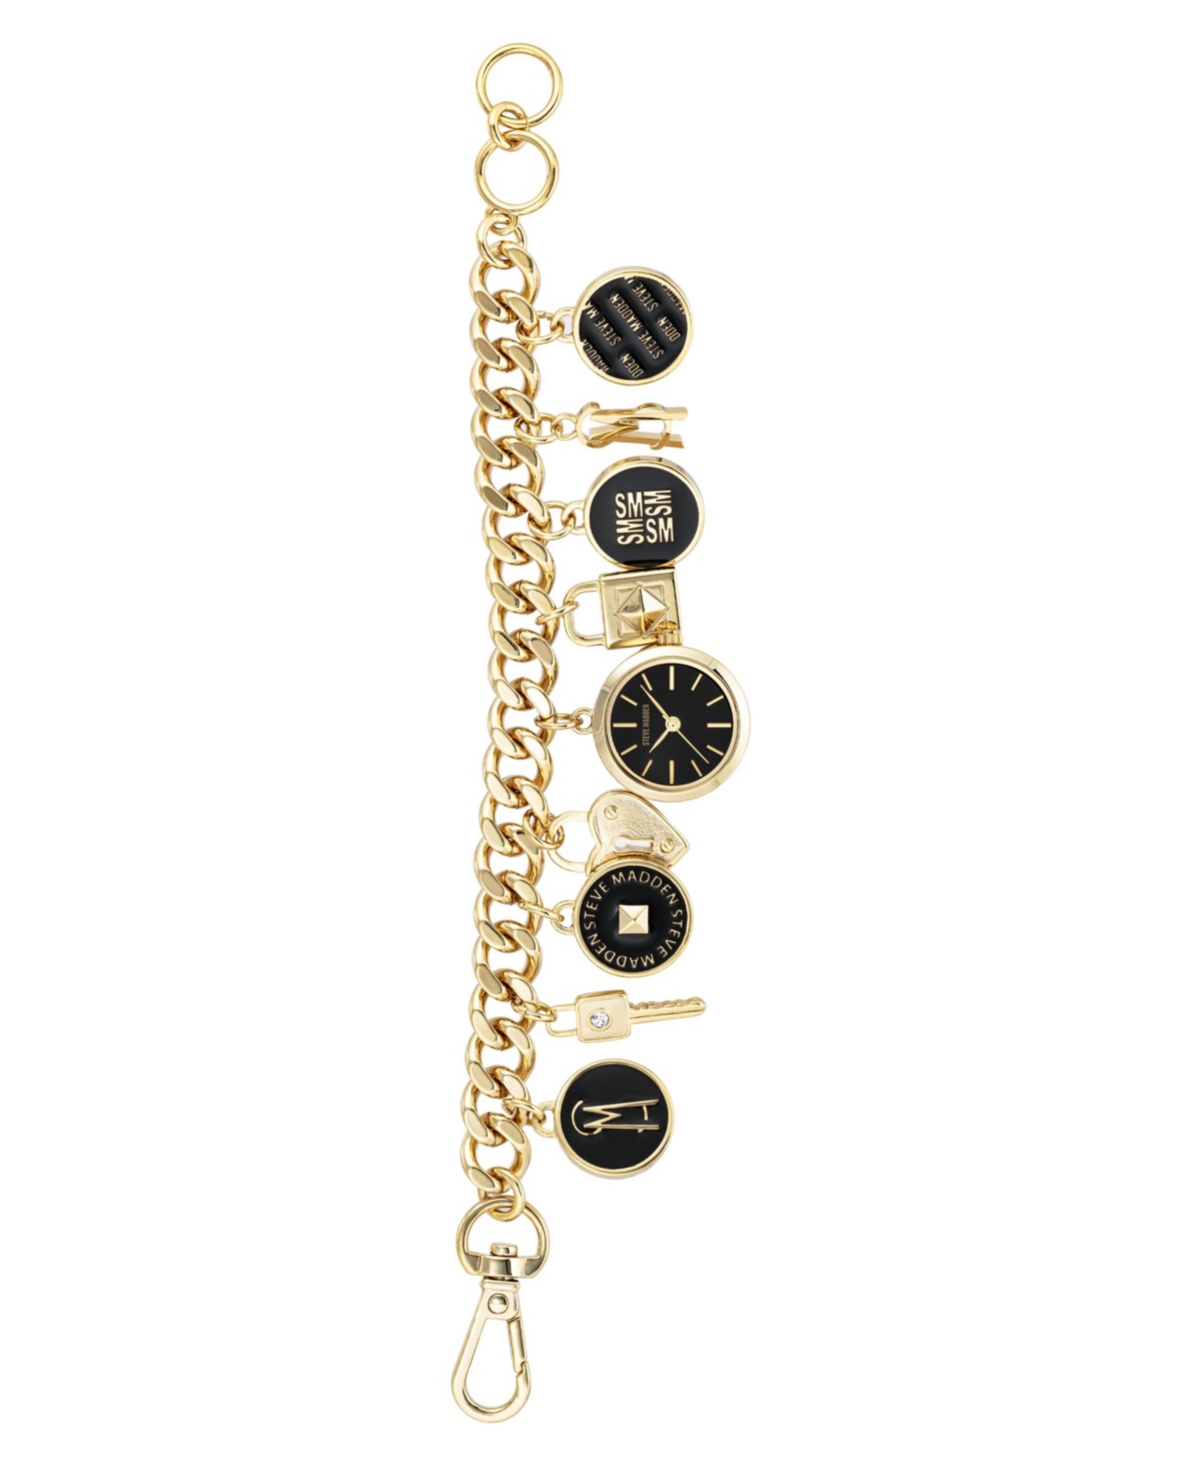 Steve Madden Women's Gold-tone Polished Metal Charm Bracelet Watch, 22mm In Gold-tone,black